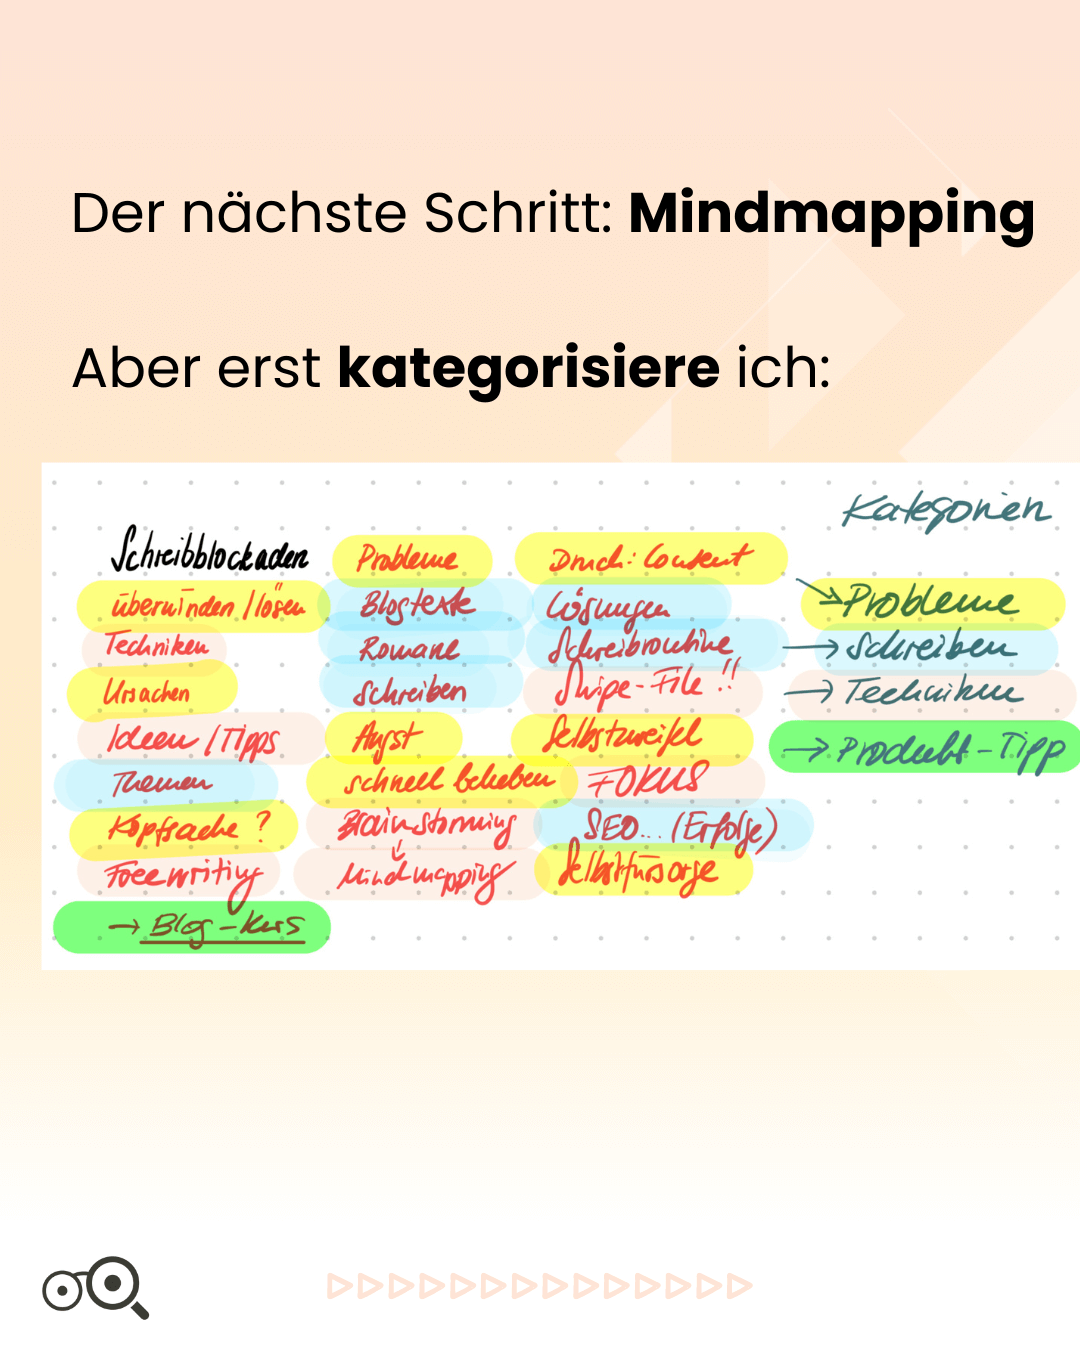 Mindmapping als Methode gegen Schreibblockaden - sarah-depold.de